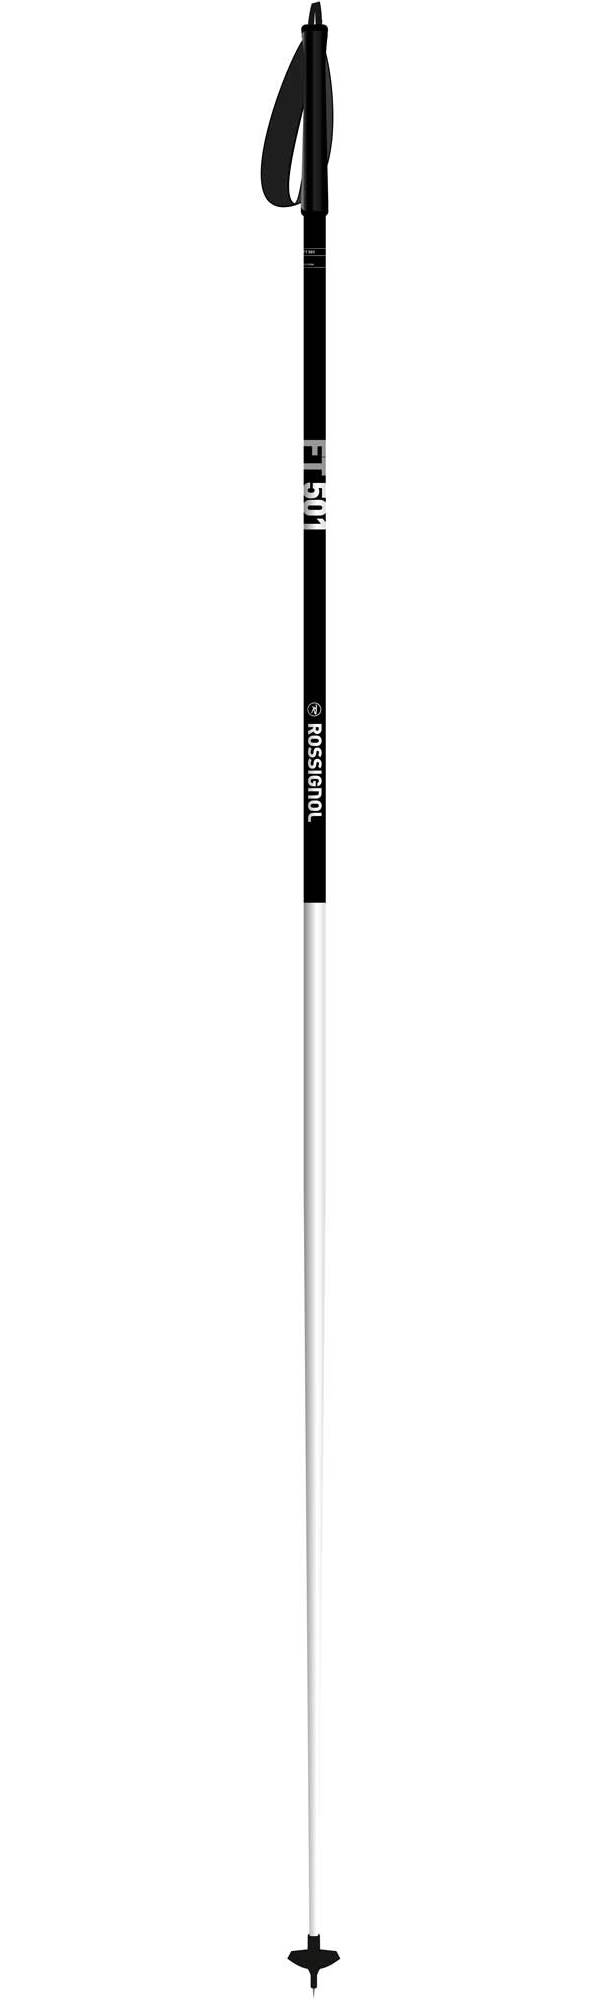 Rossignol Junior FT 501 Cross-Country Ski Poles product image